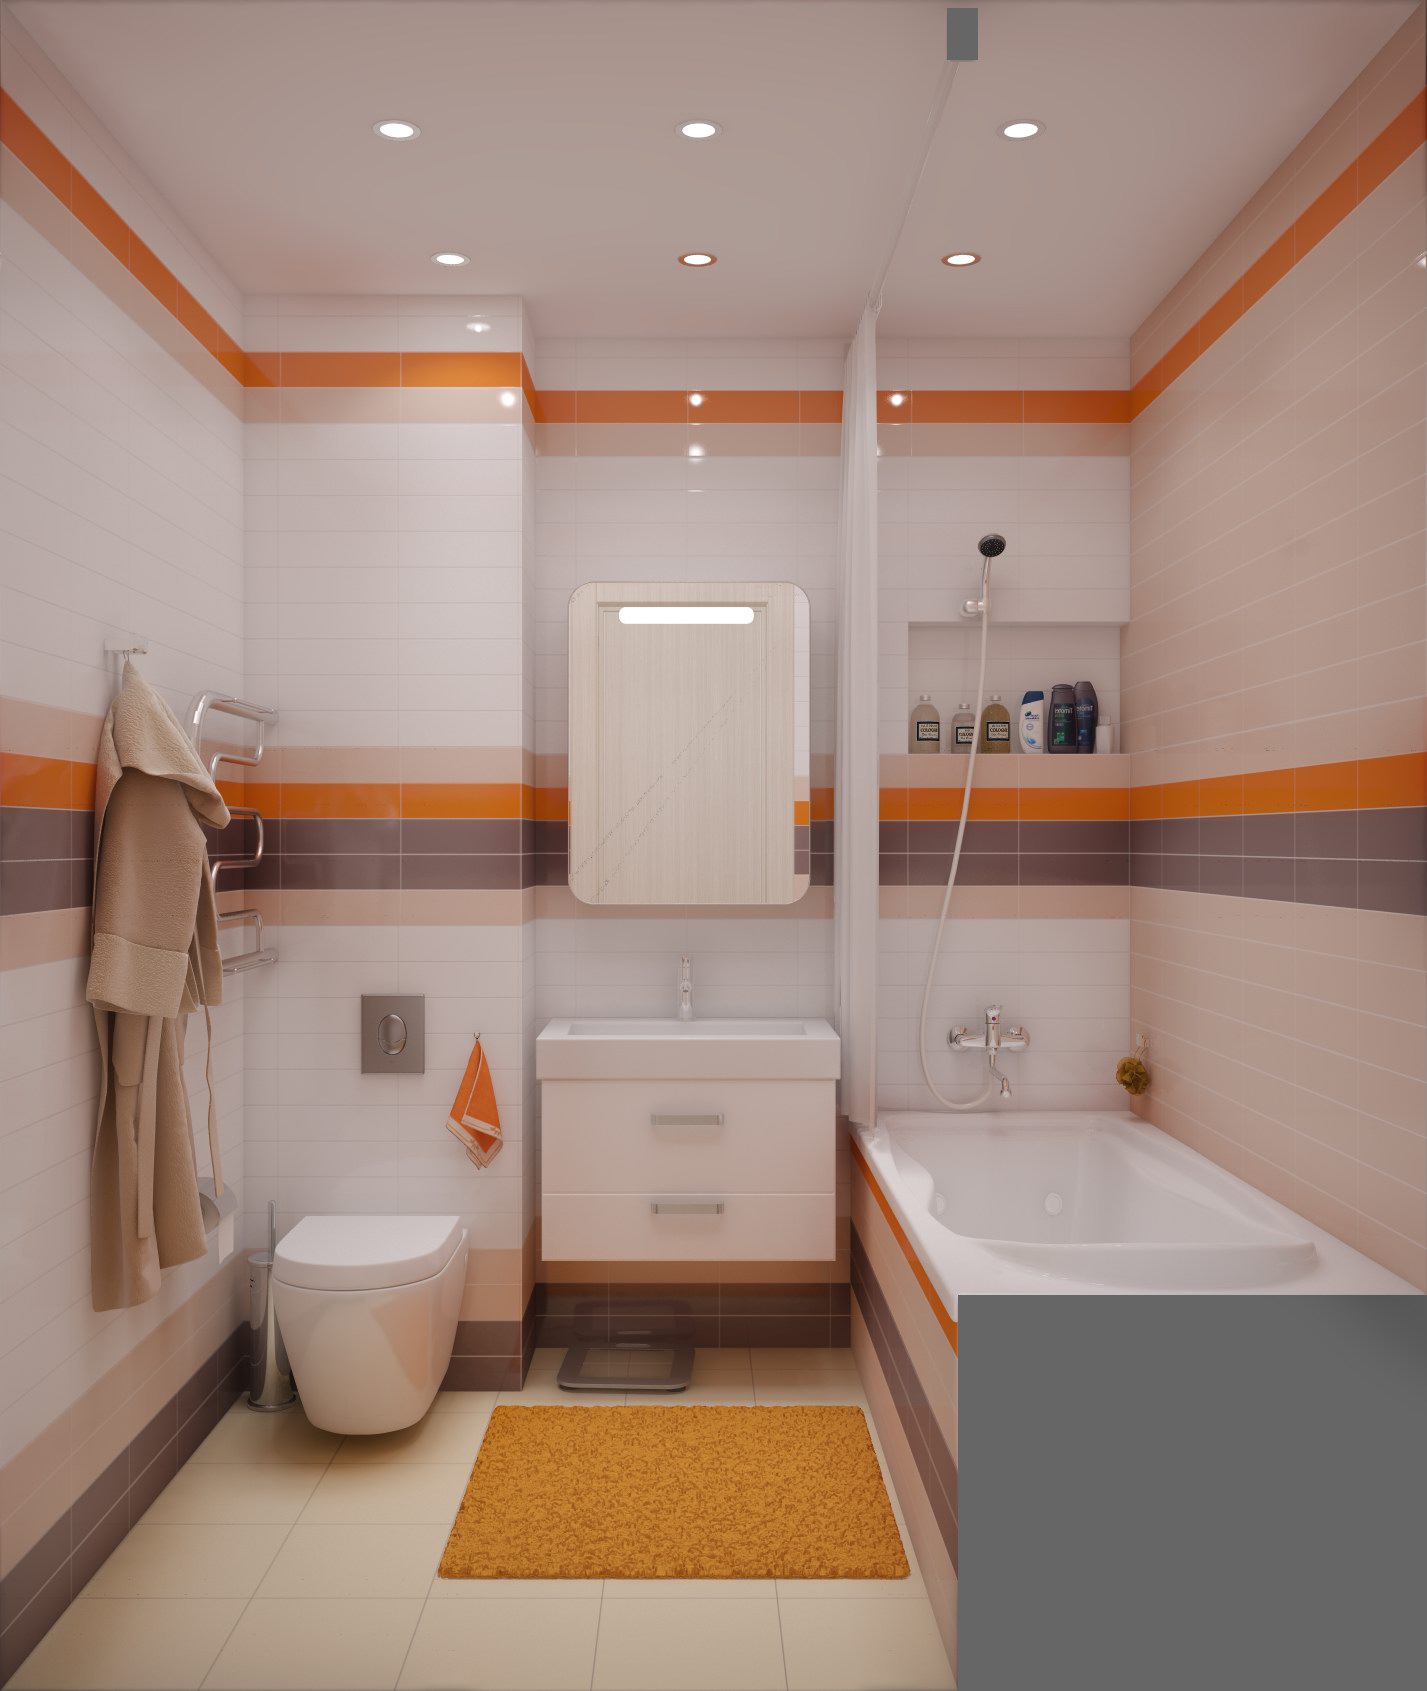 Ванная комната с перегородкой от туалета дизайн